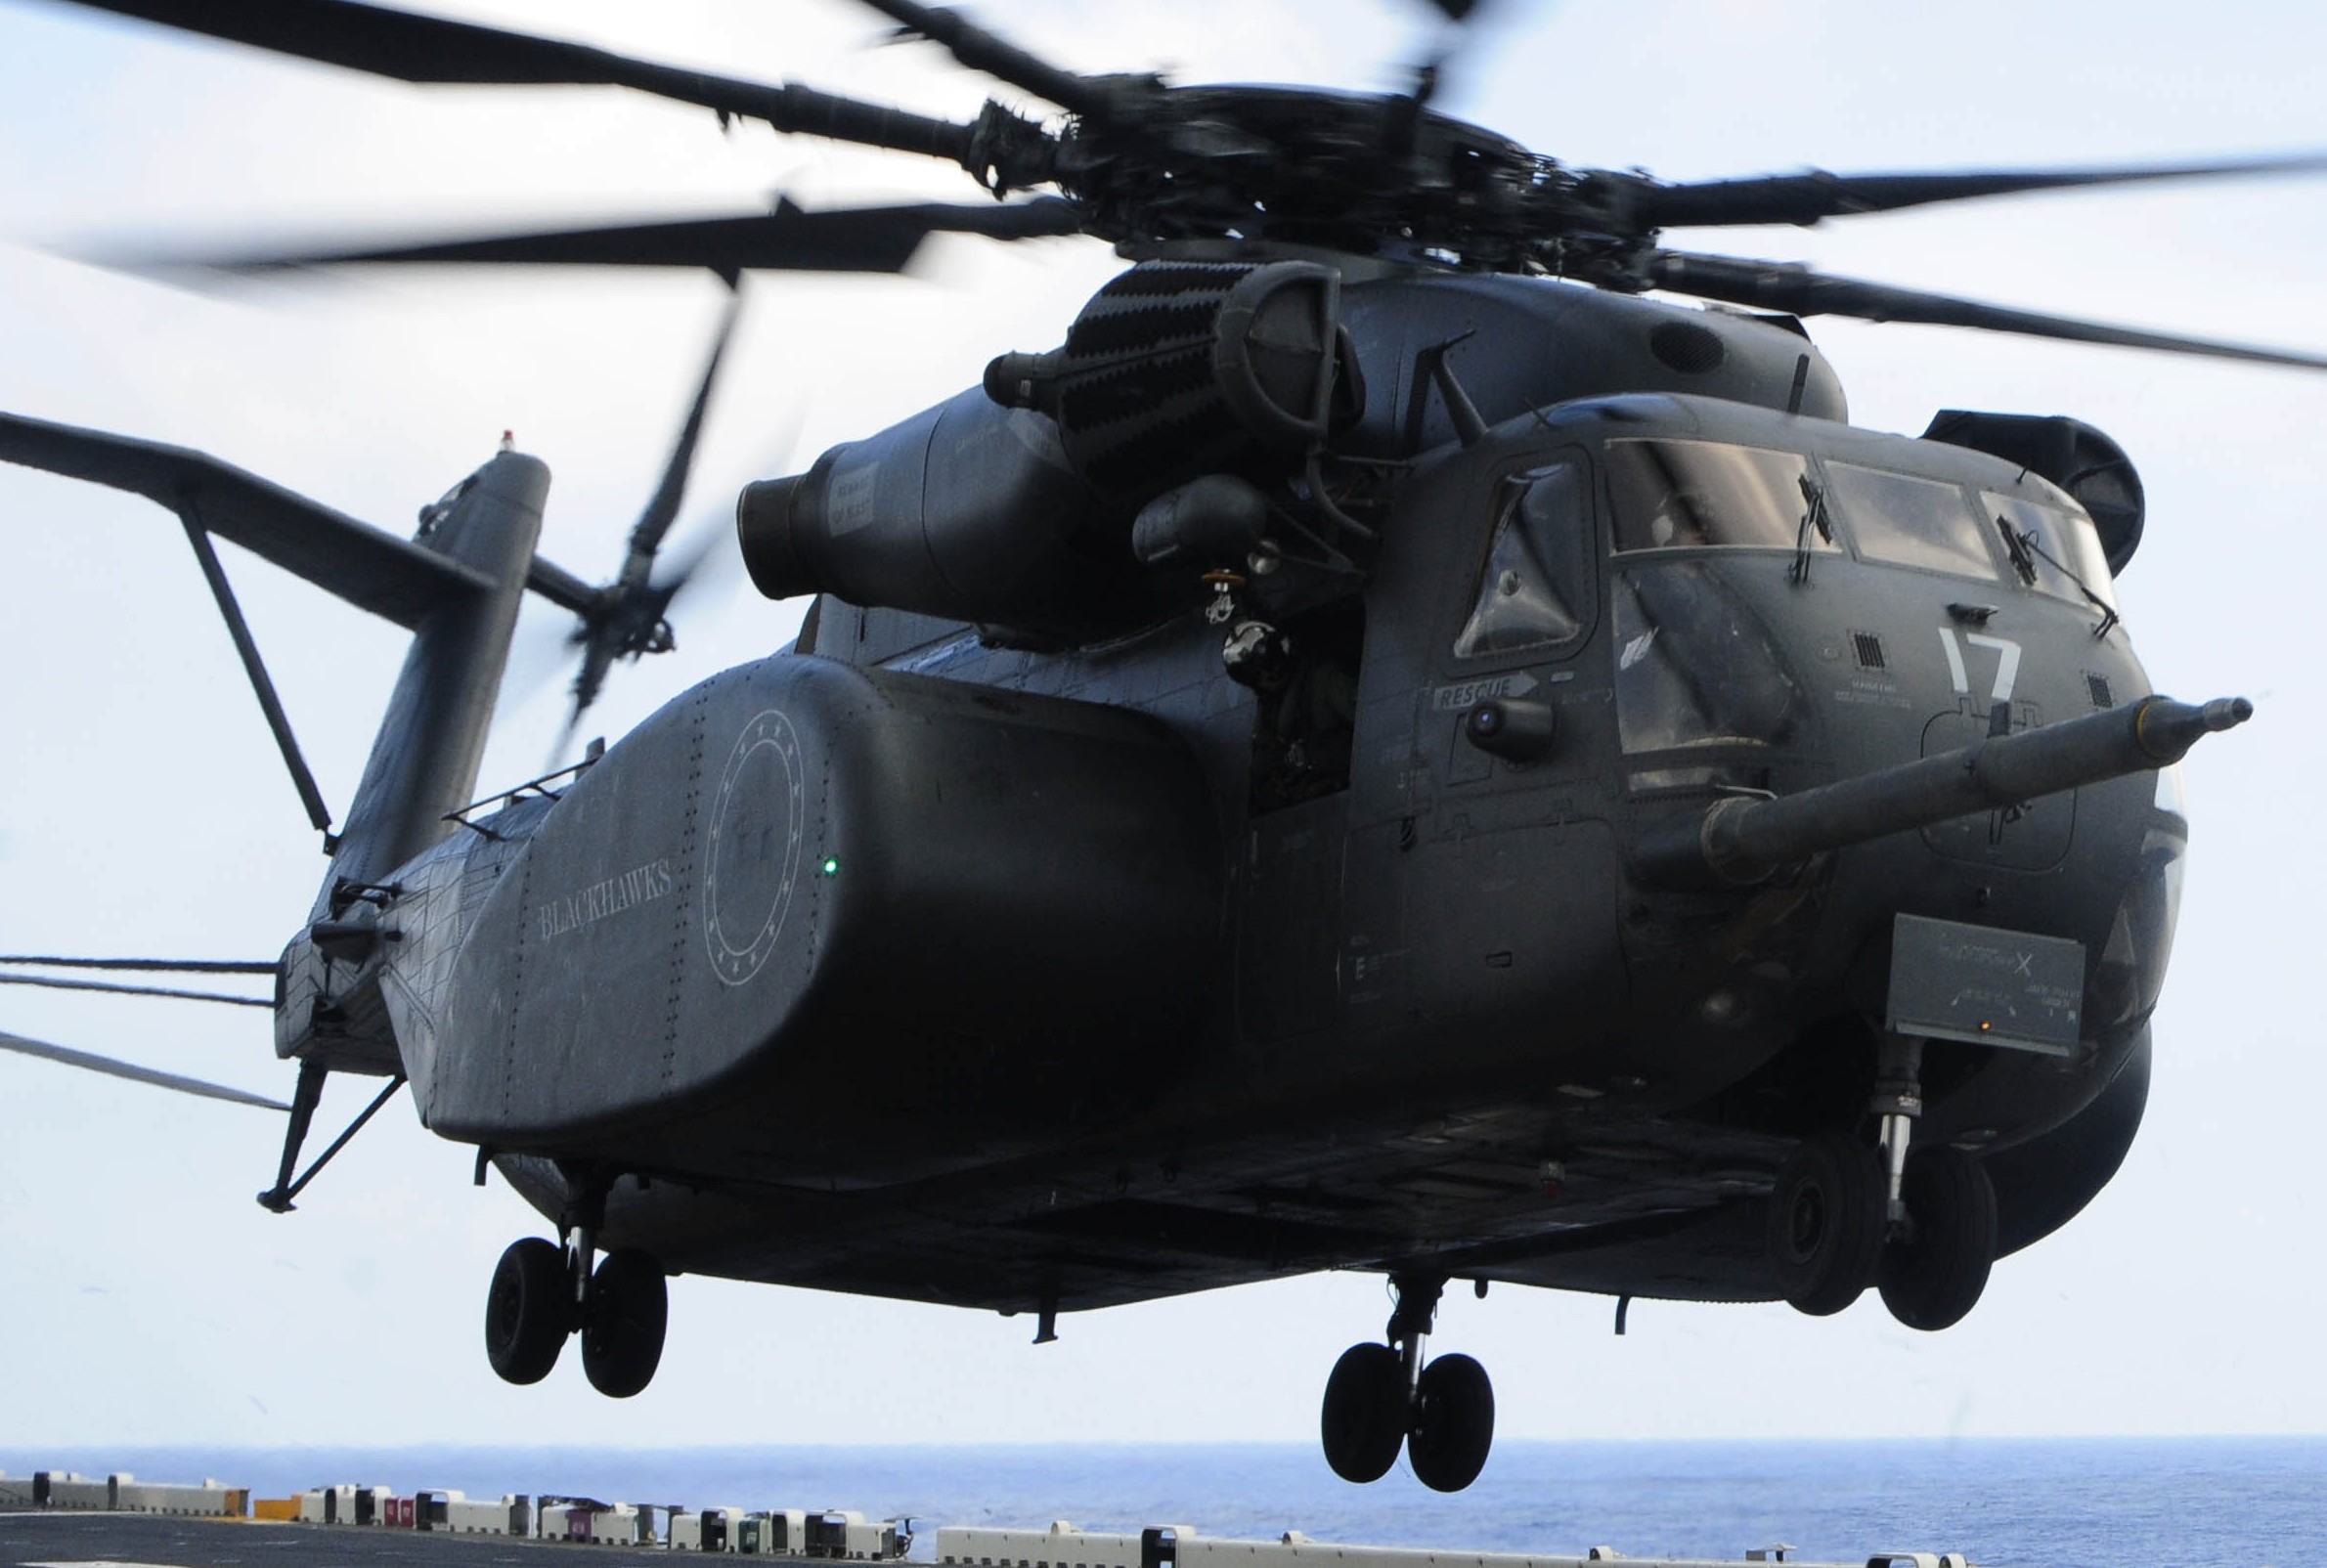 hm-15 blackhawks helicopter mine countermeasures squadron navy mh-53e sea dragon 50